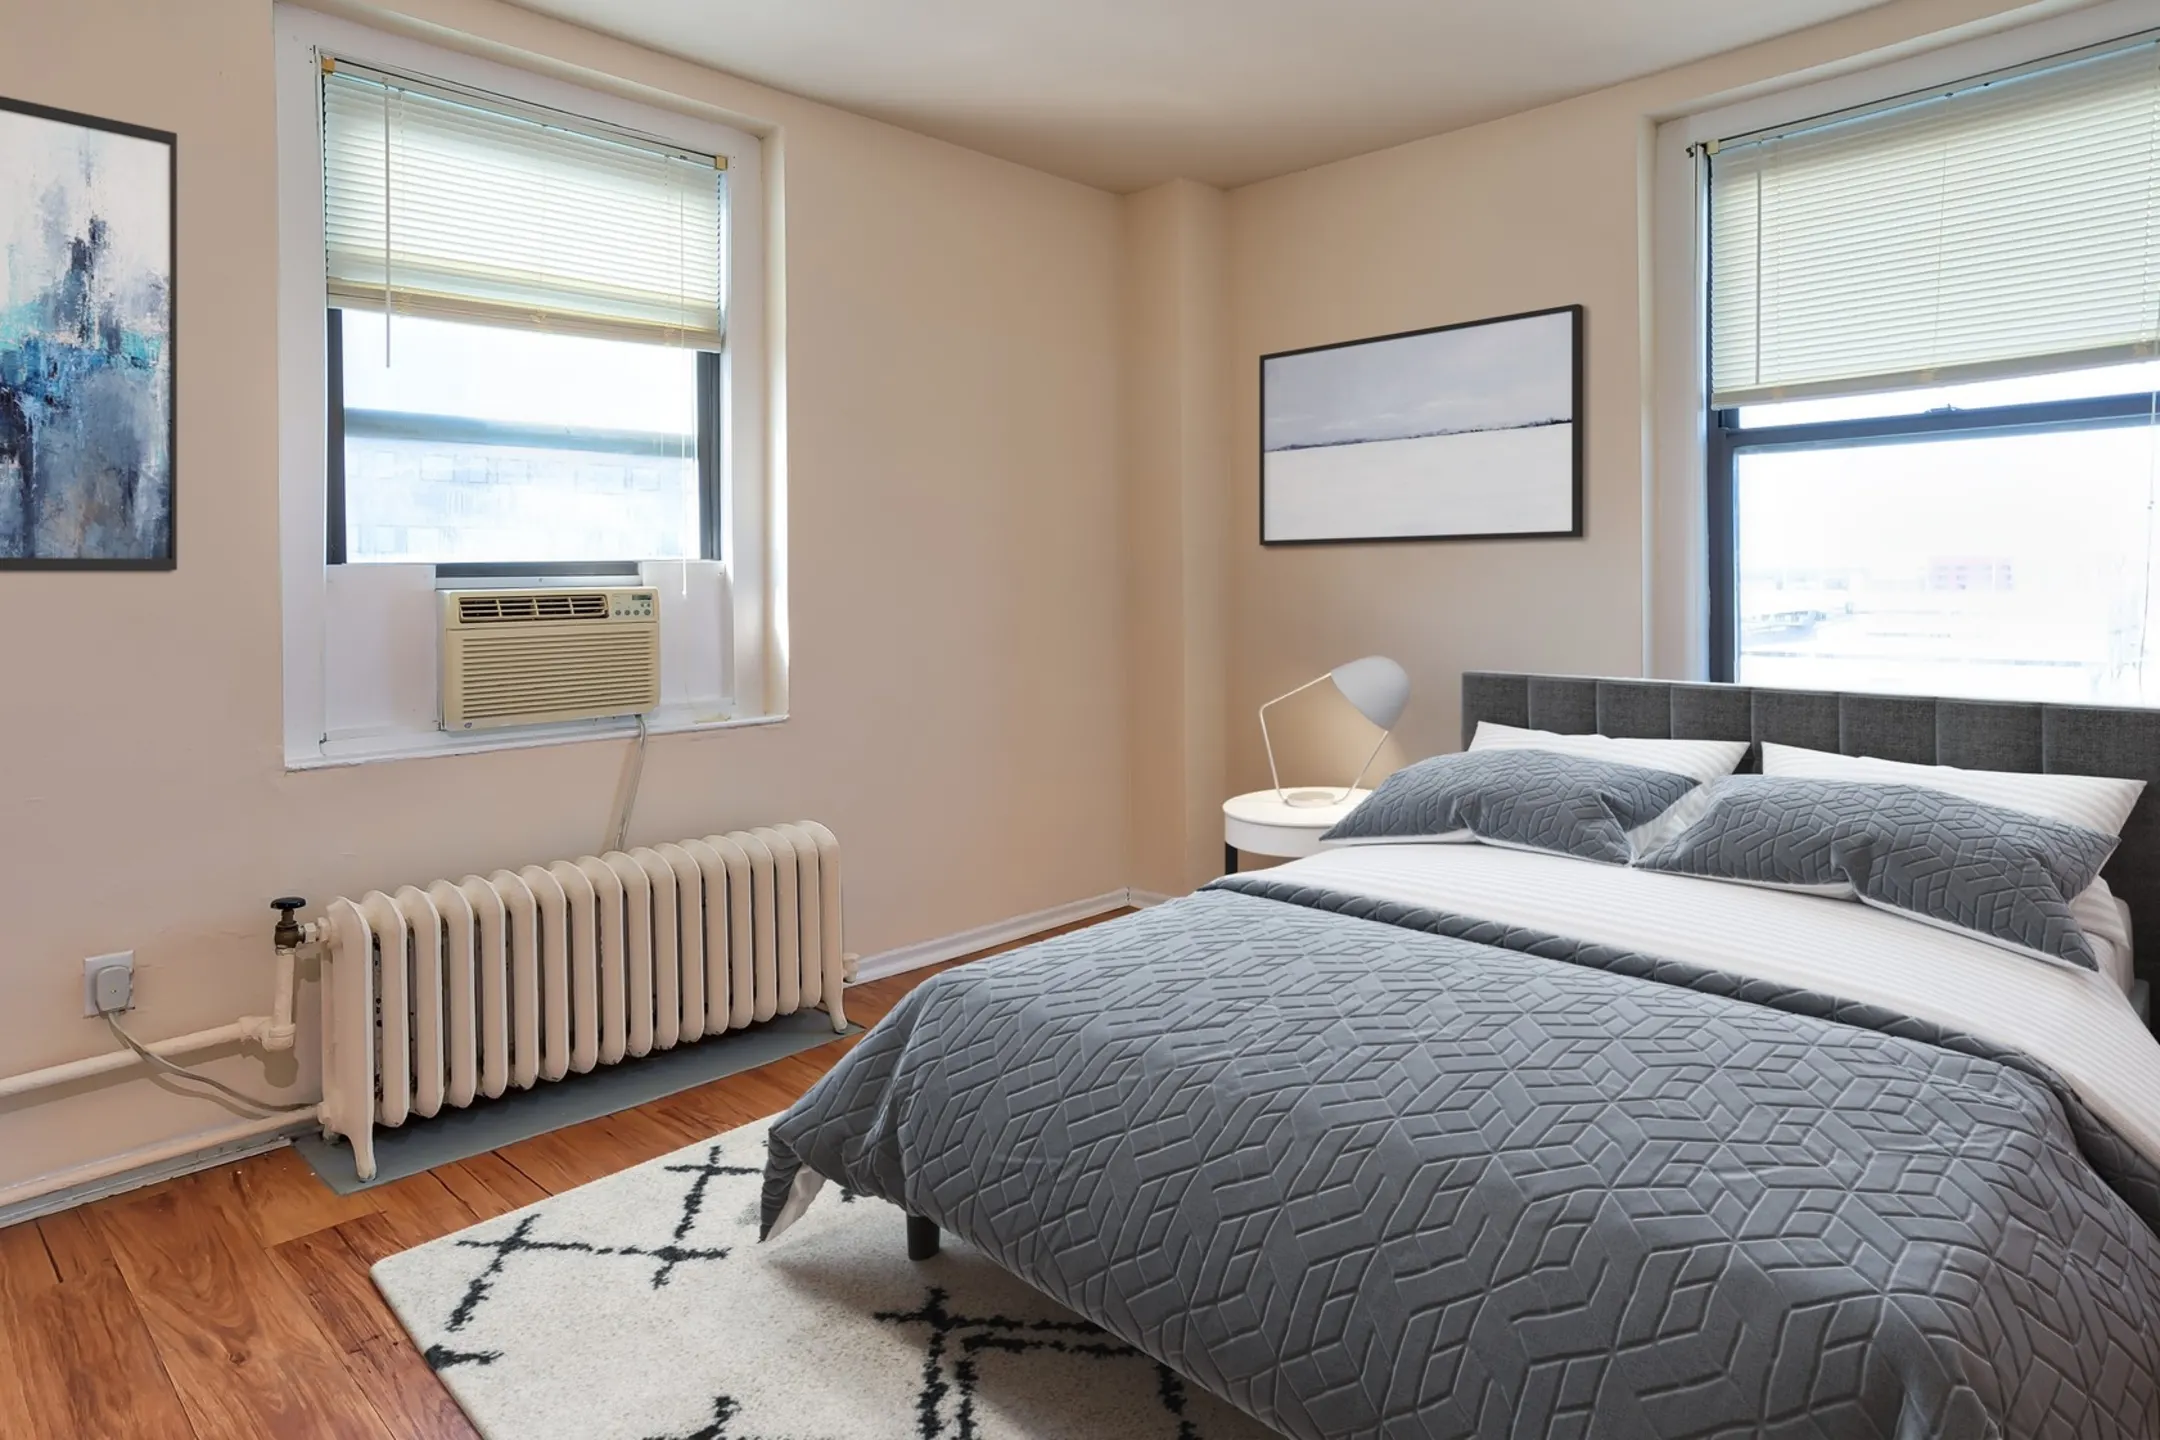 Bedroom - Chestnut Hall Apartments - Philadelphia, PA